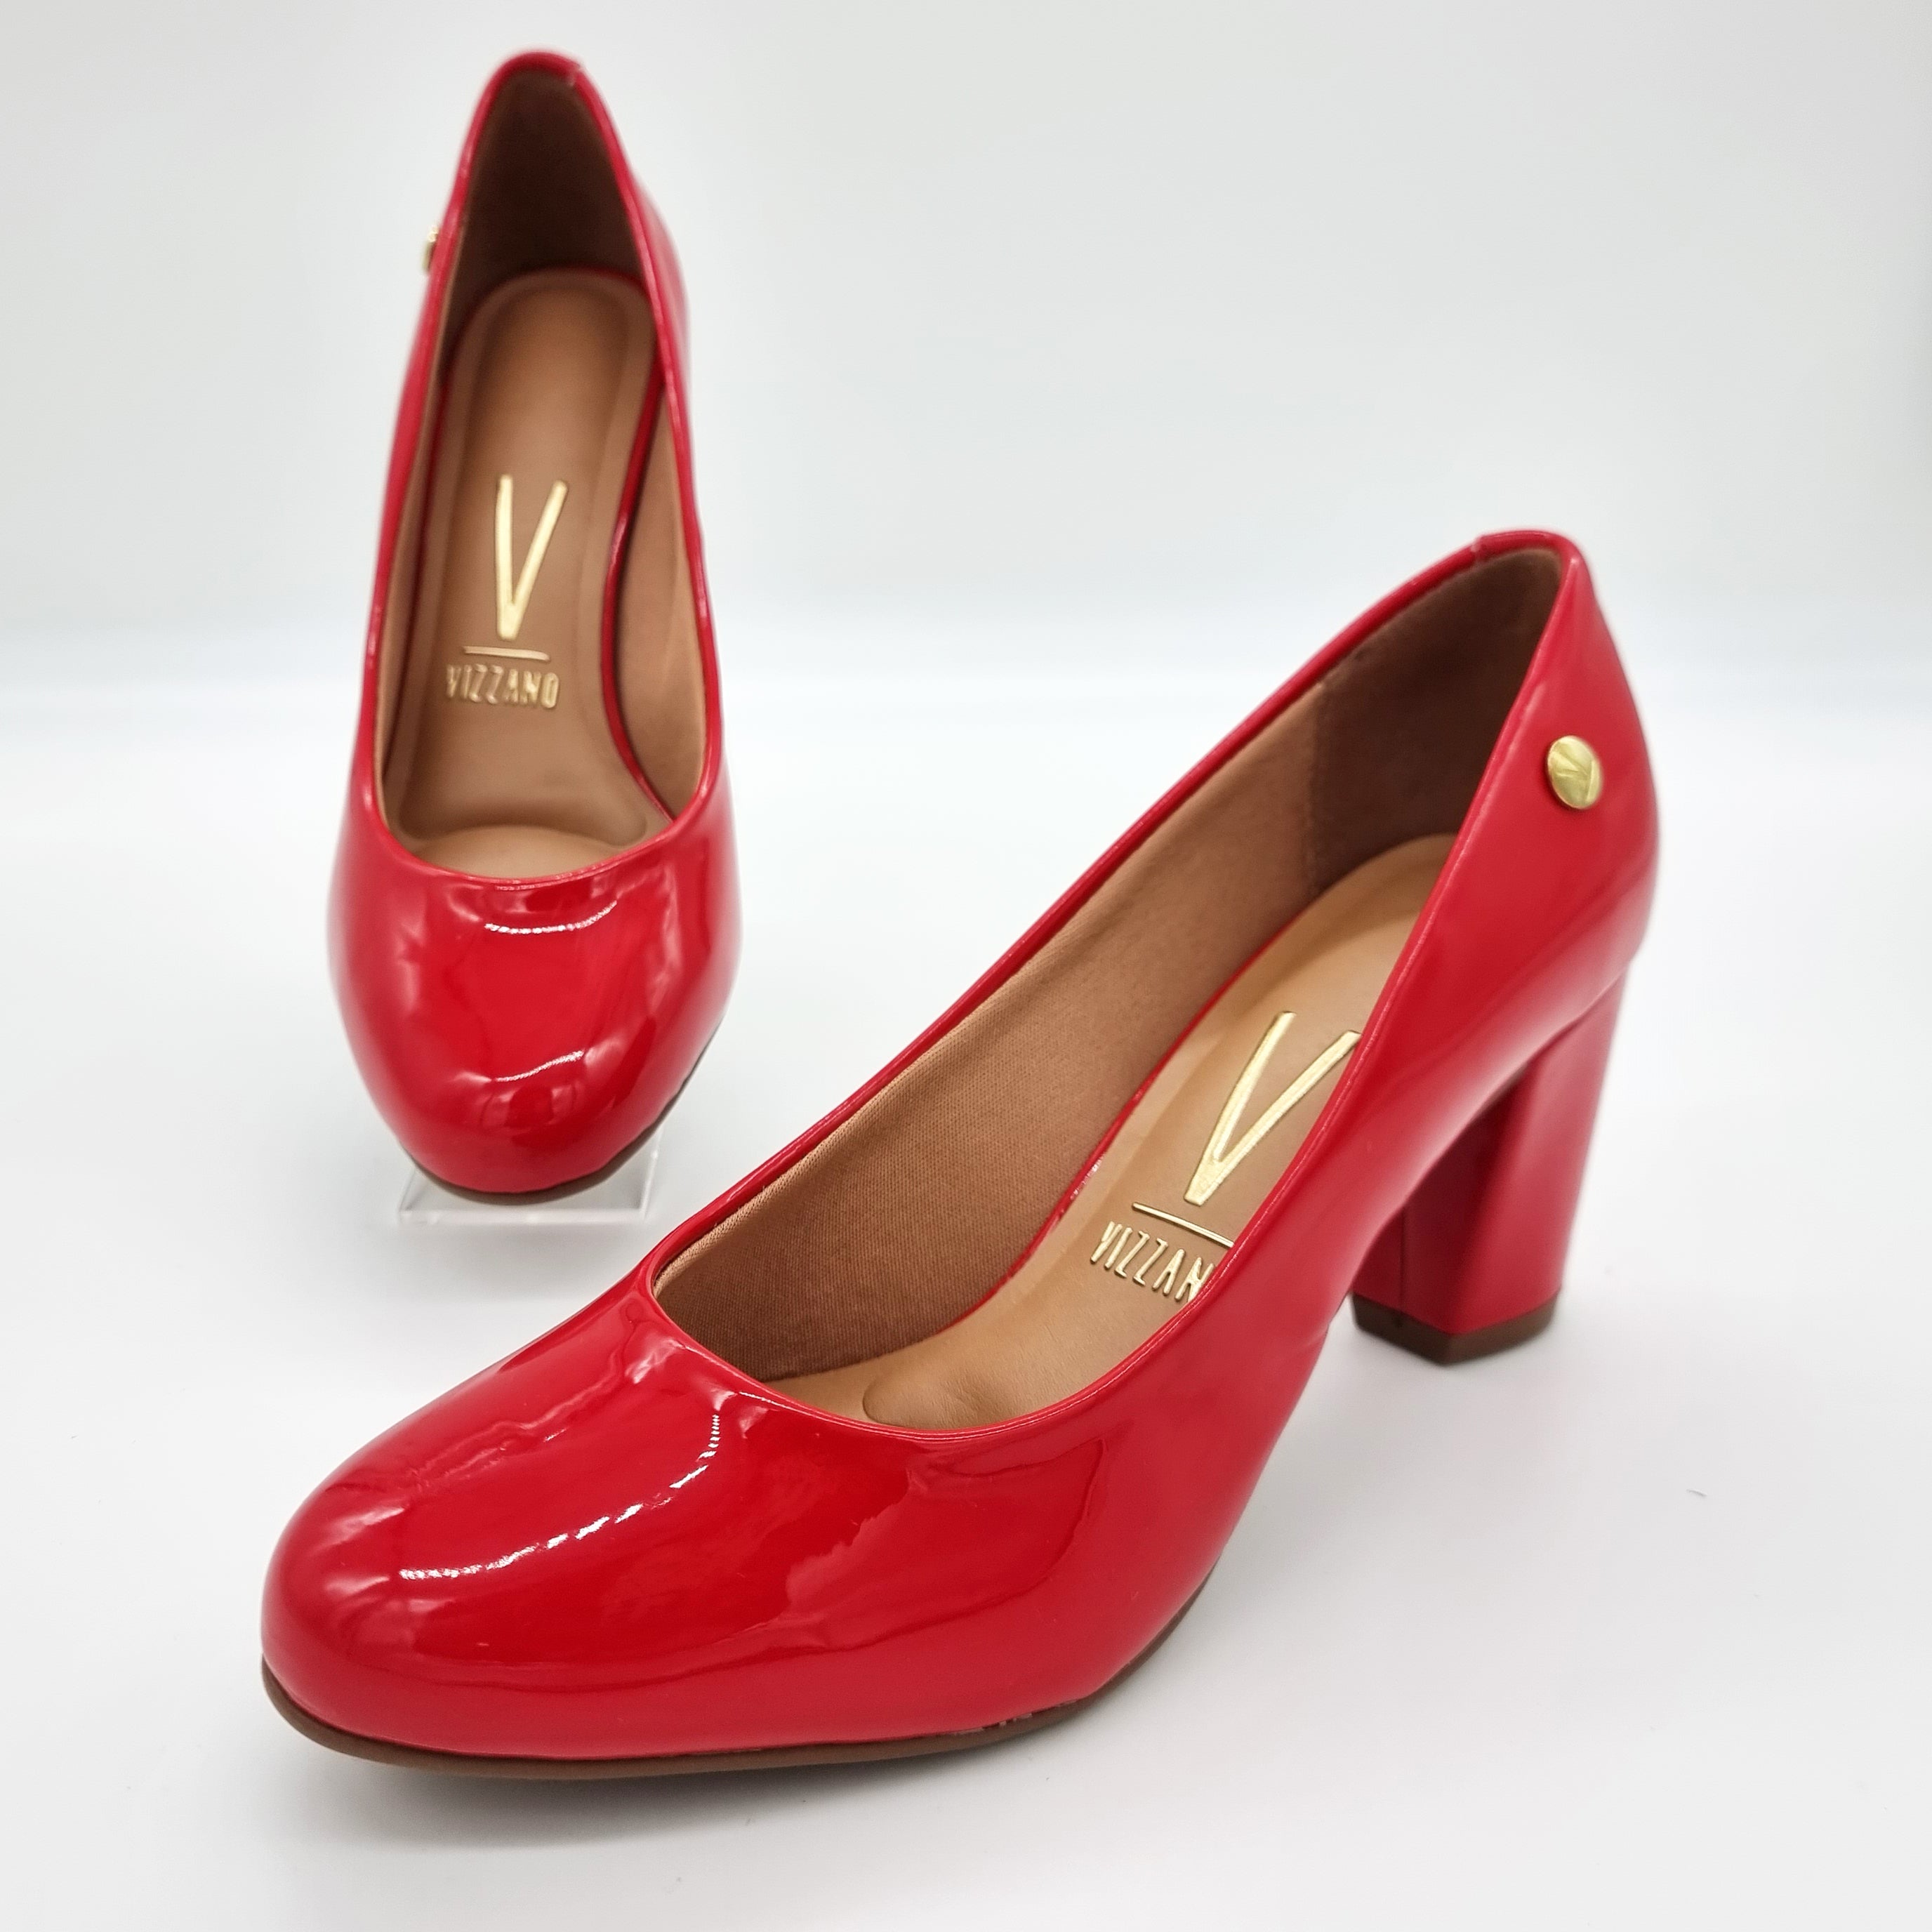 Vizzano 1259-200 Block Heel Round Toe Pump in Red Patent